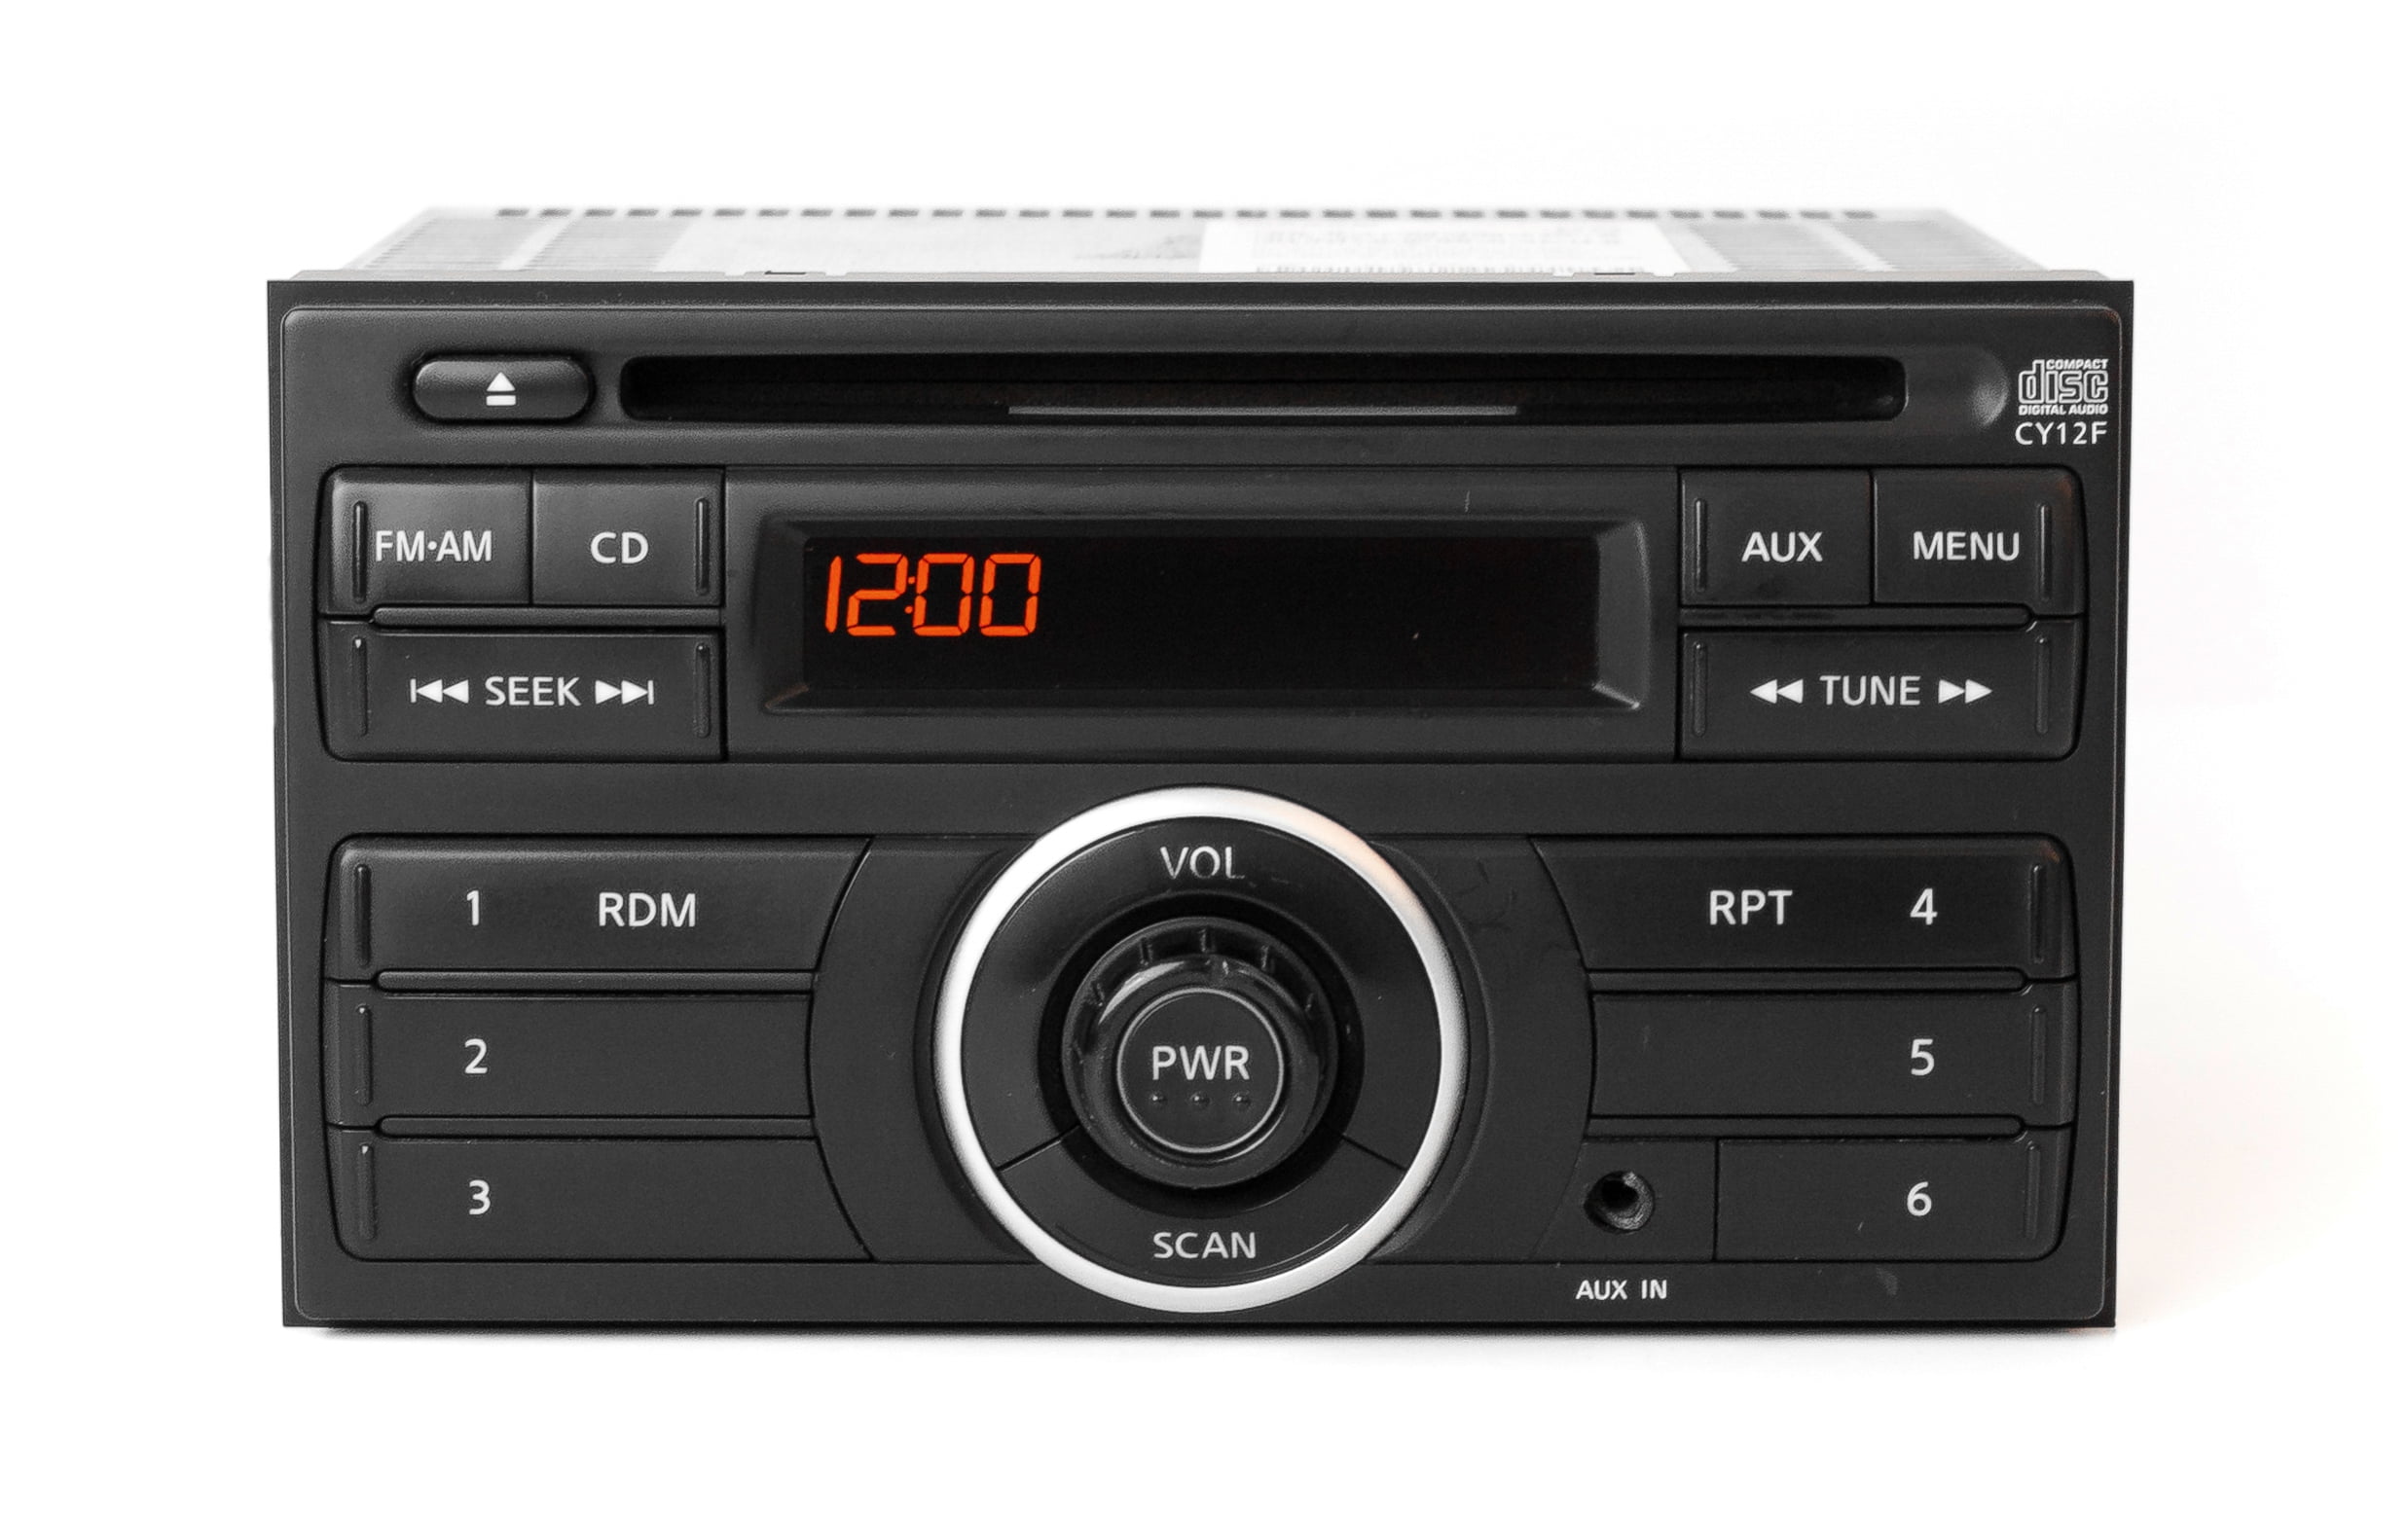 201012 Nissan Sentra AM FM CD Player w Auxiliary Input